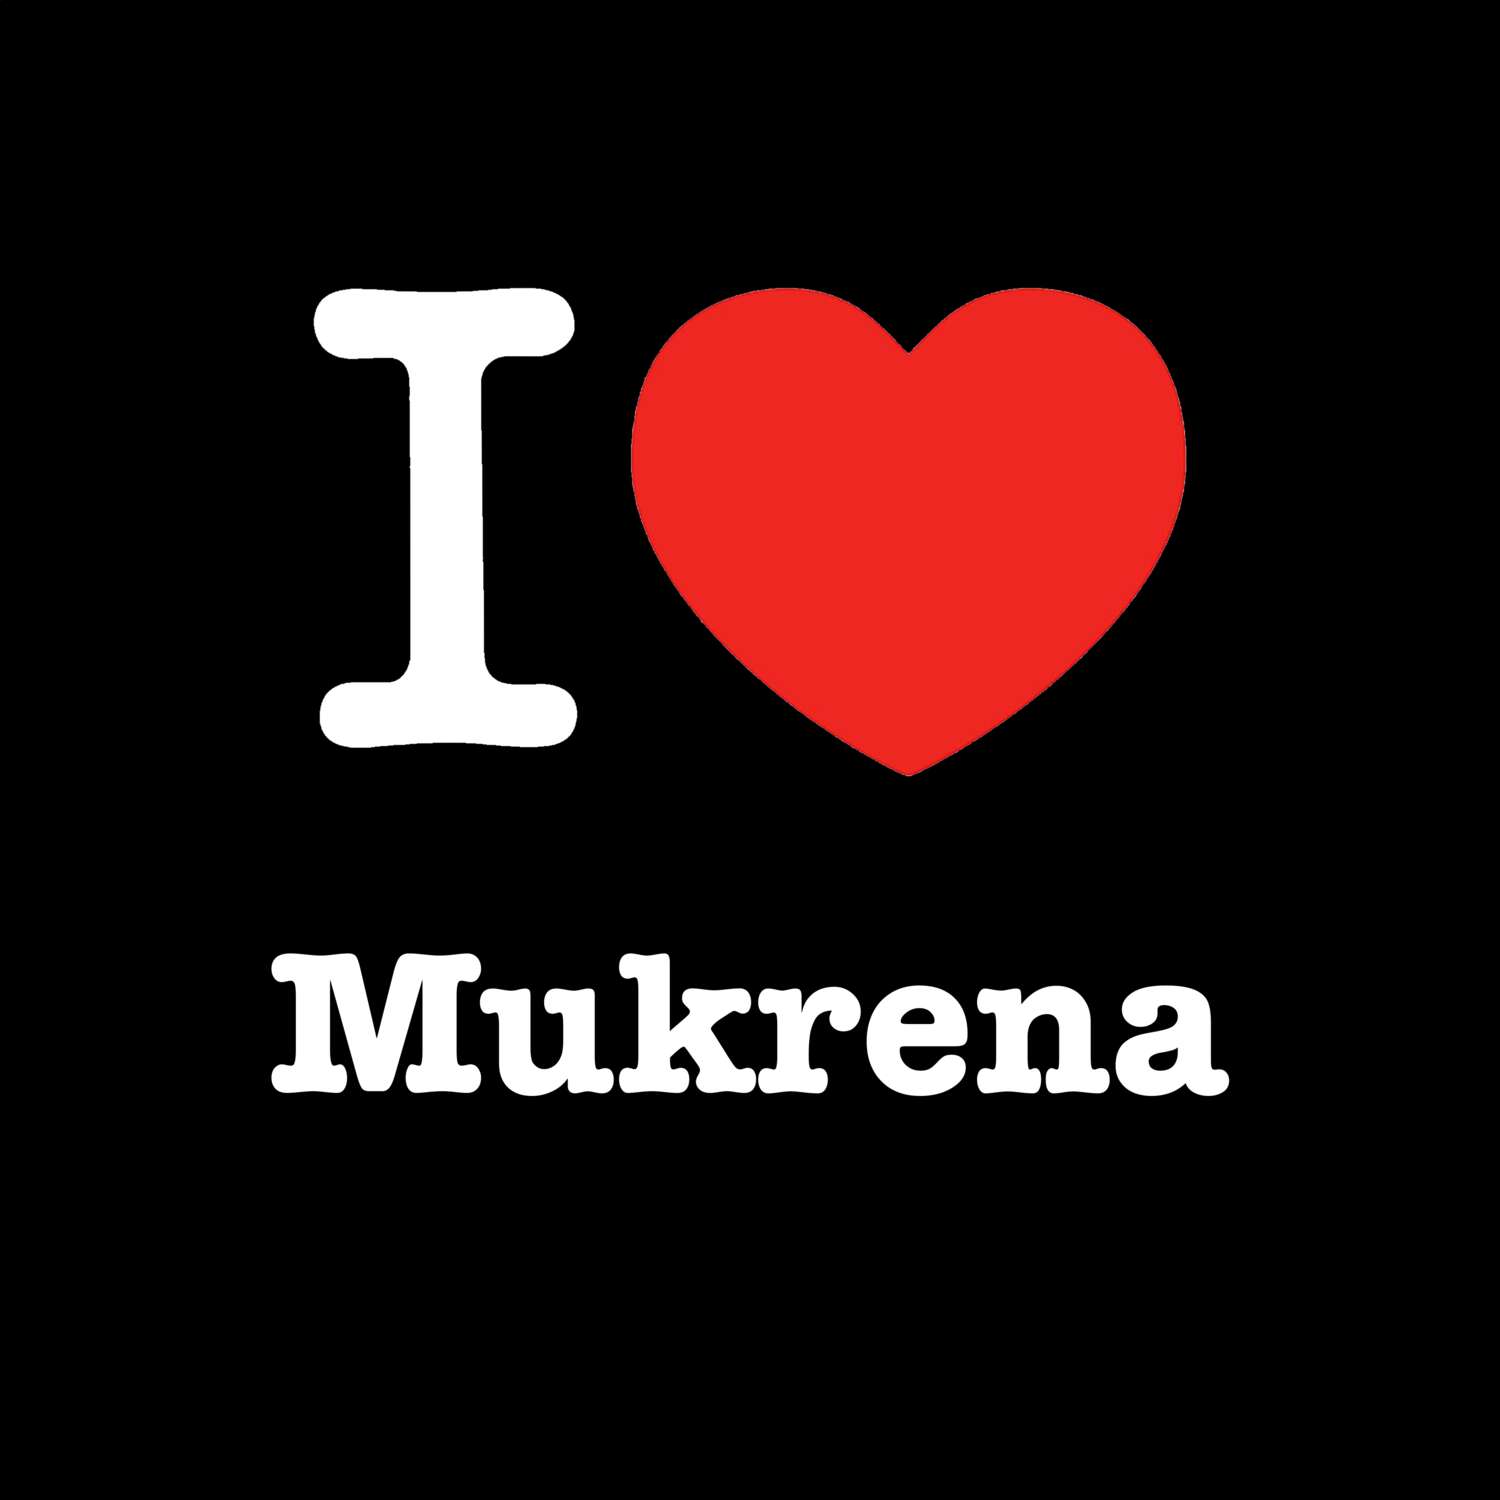 Mukrena T-Shirt »I love«